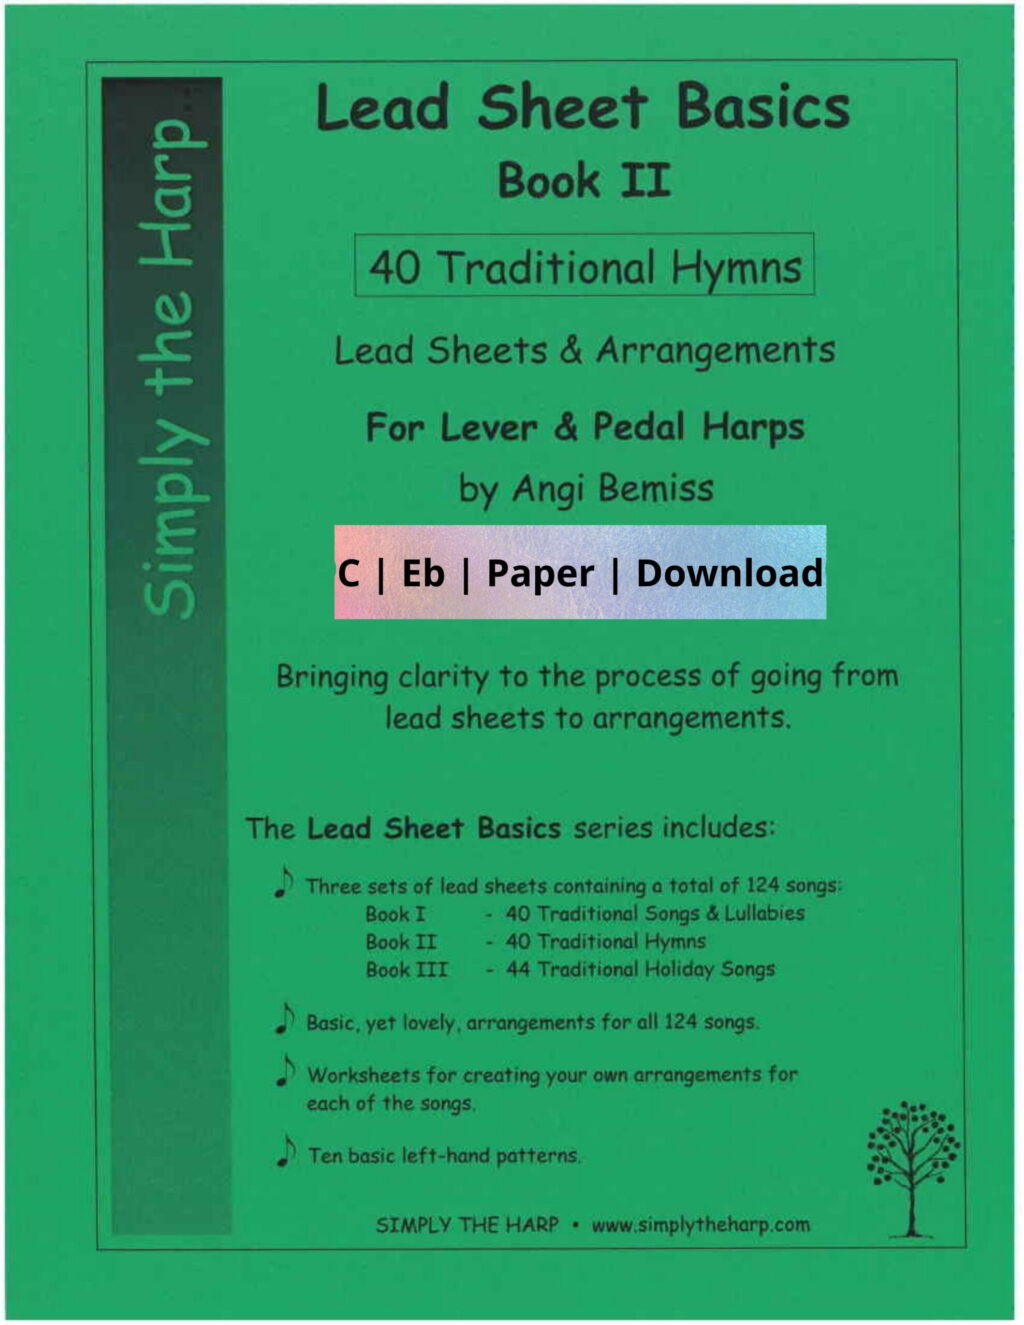 Lead Sheet Basics Book 2, Hymns by Bemiss Cover at folkharp.com